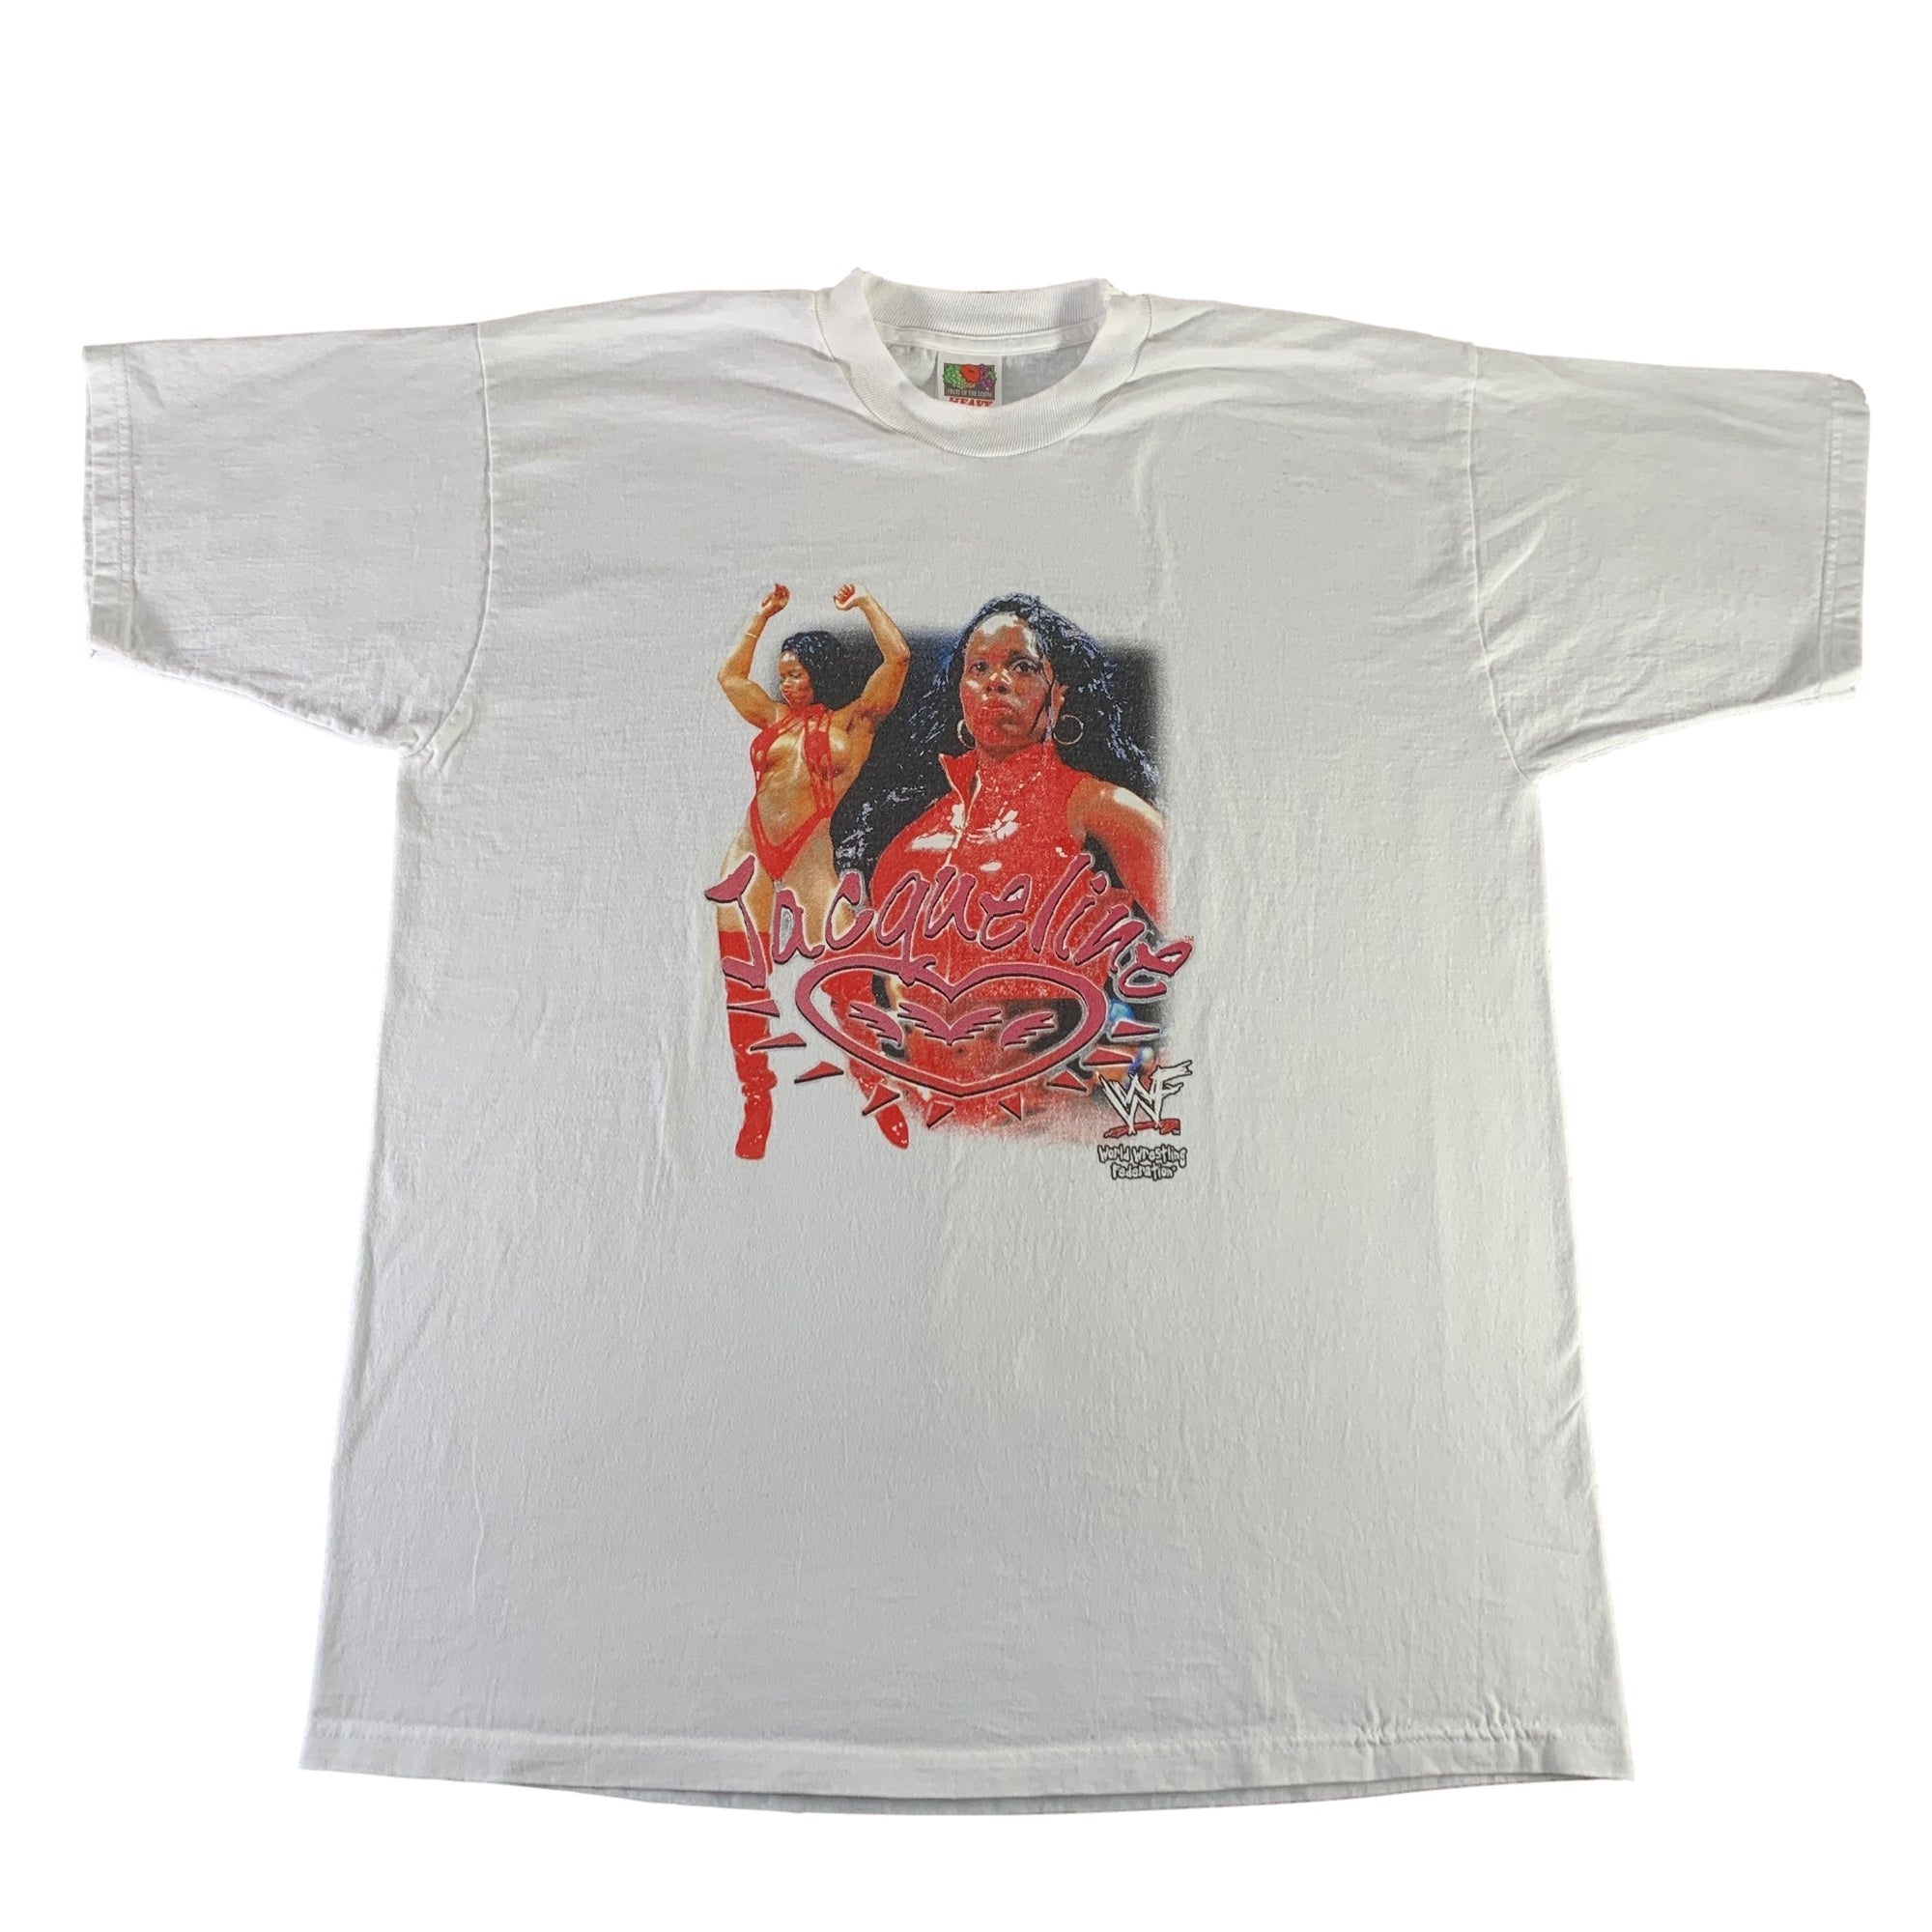 Vintage Jacqueline "WWF" T-Shirt - jointcustodydc